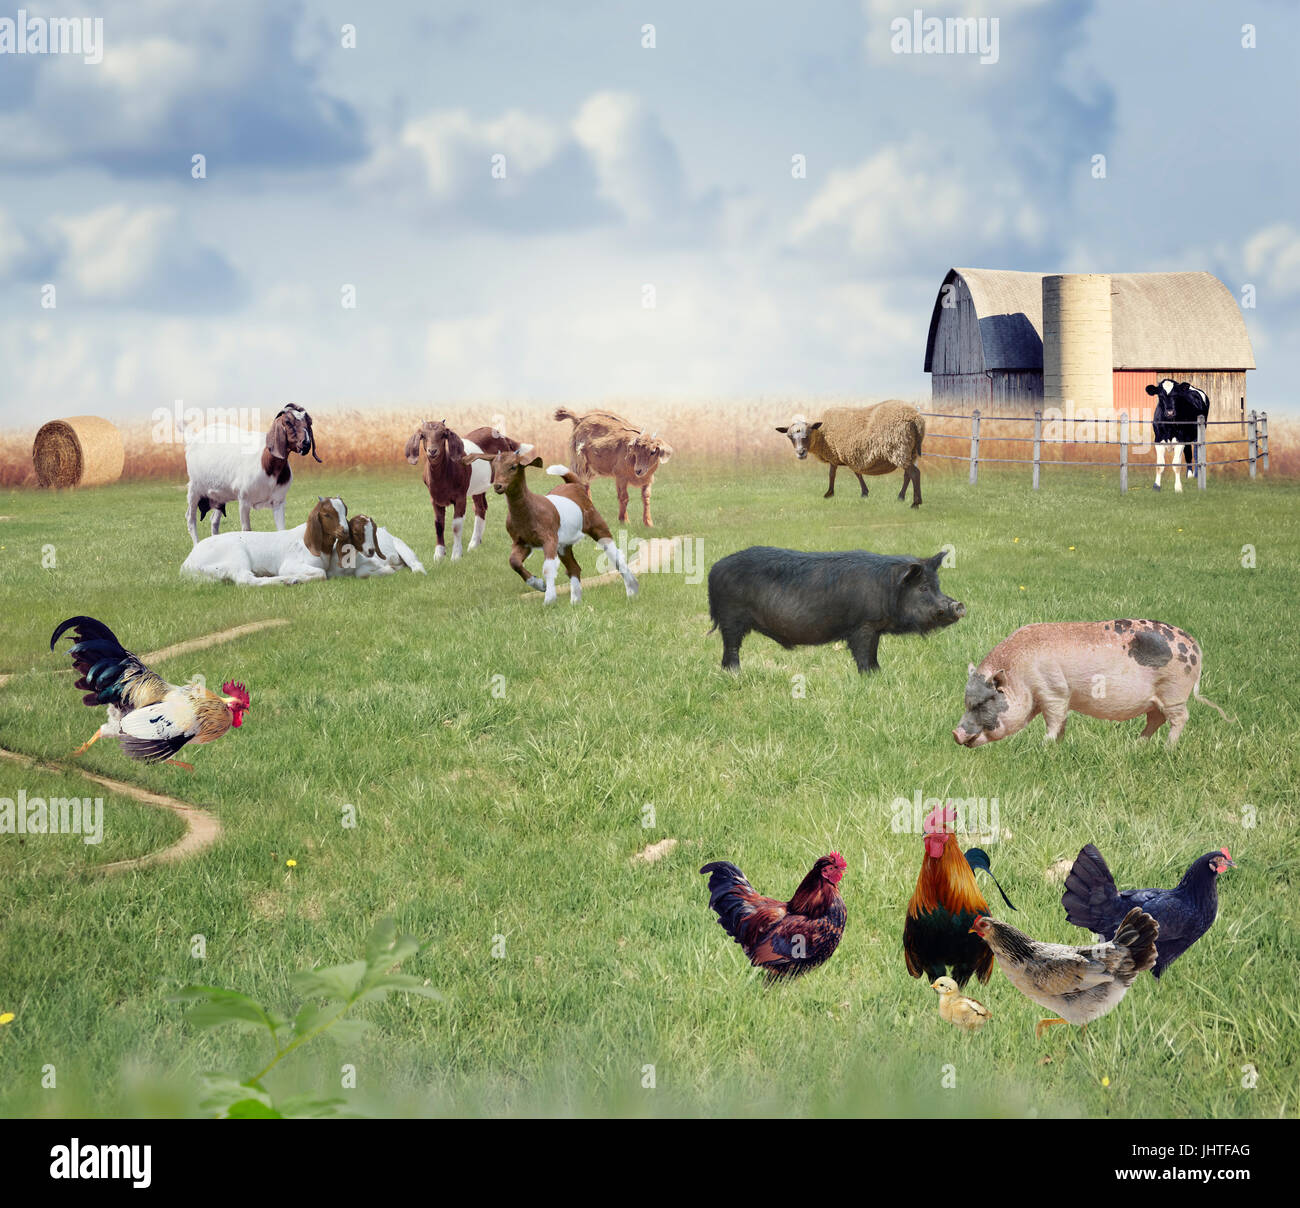 Farm Animals in a field Stock Photo